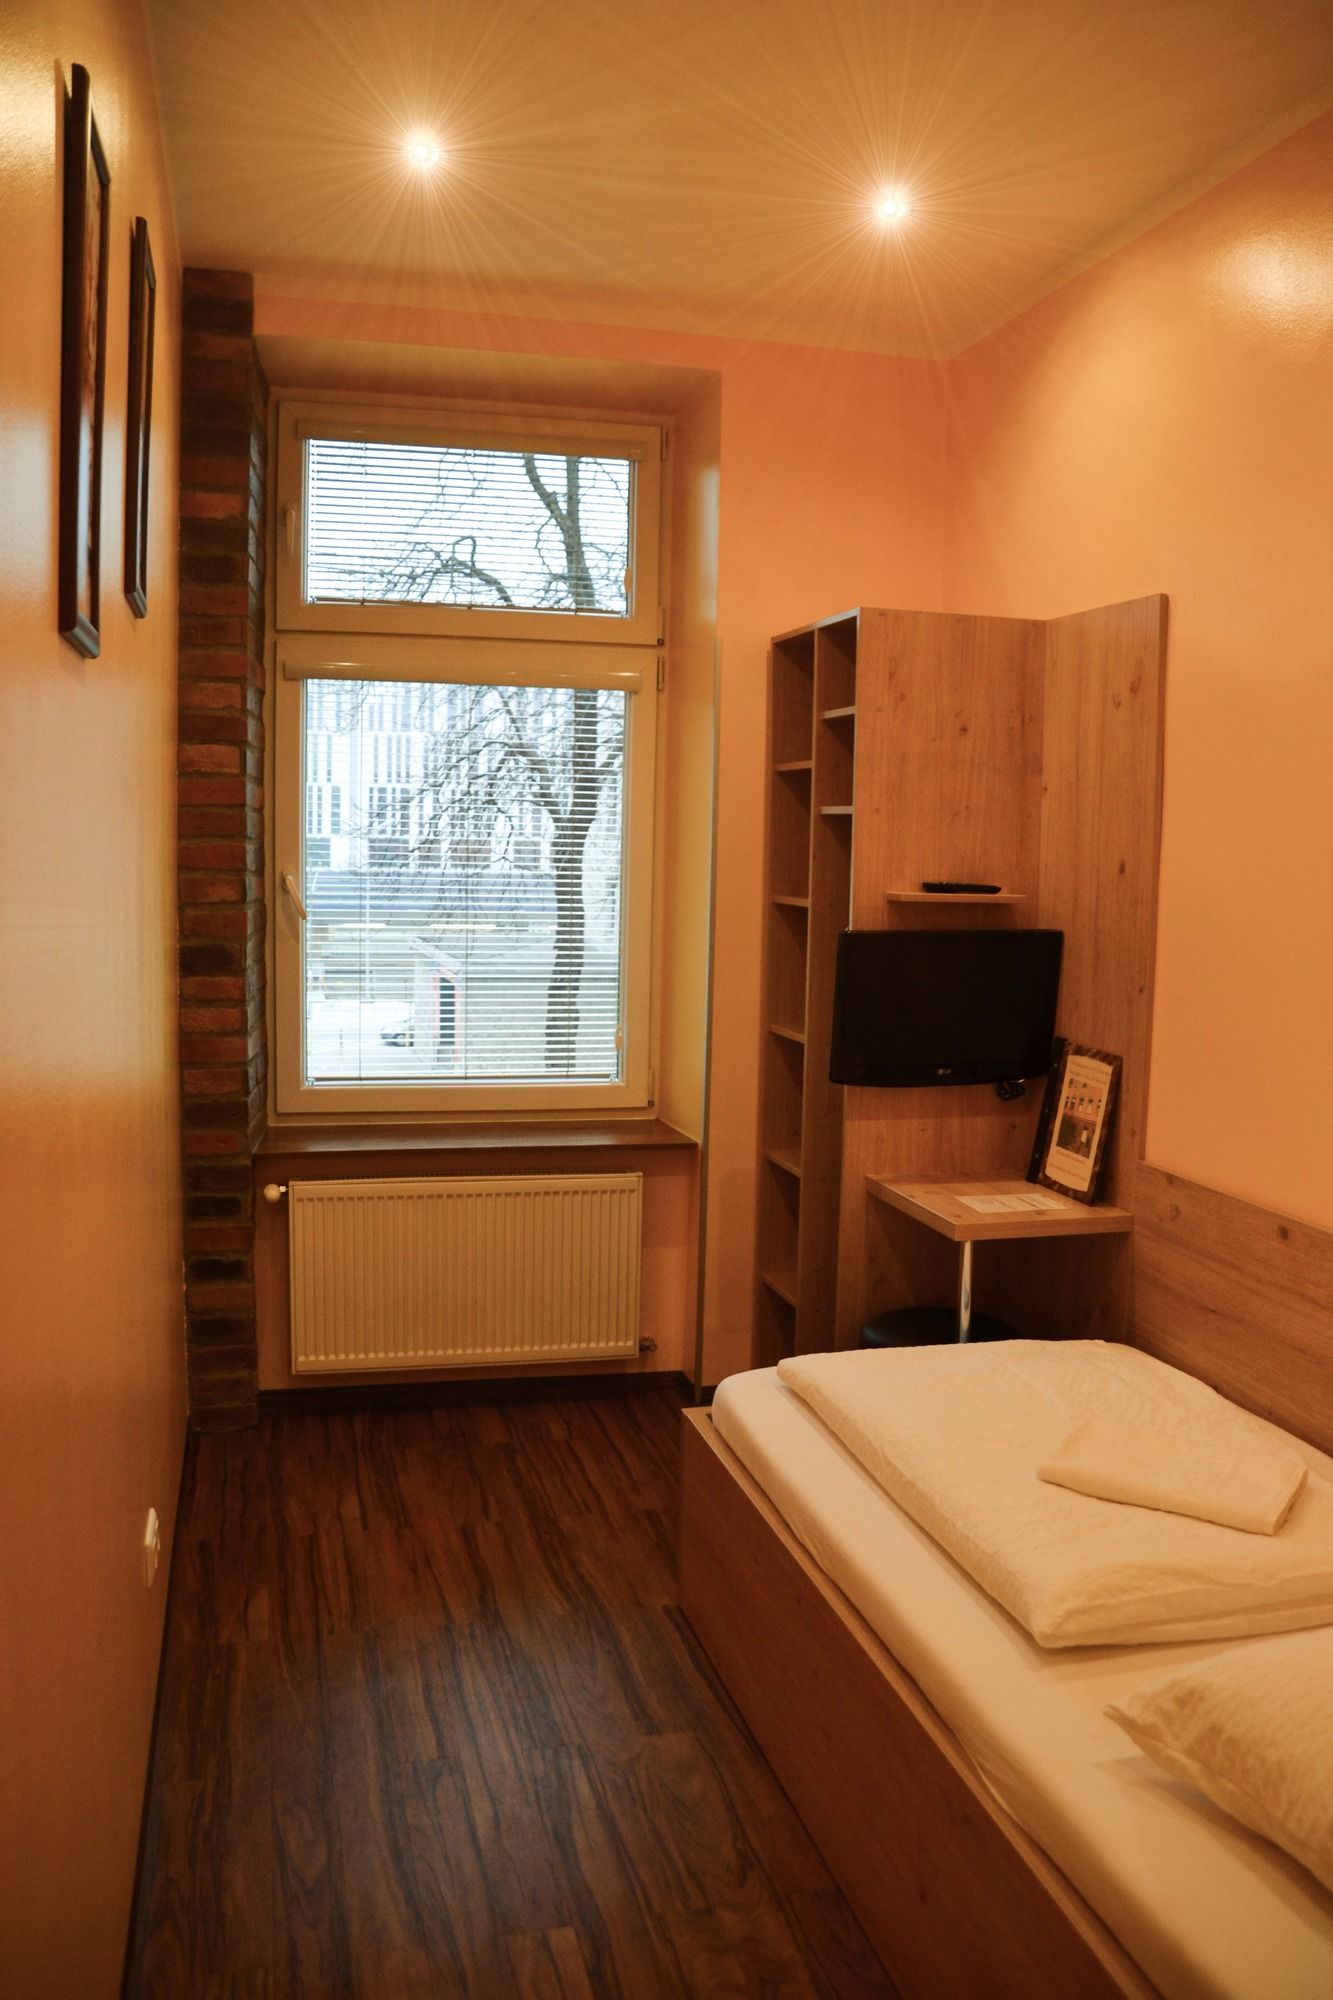 Do Step Inn Home - Hotel & Hostel,Vienna 2023 | Trip.com